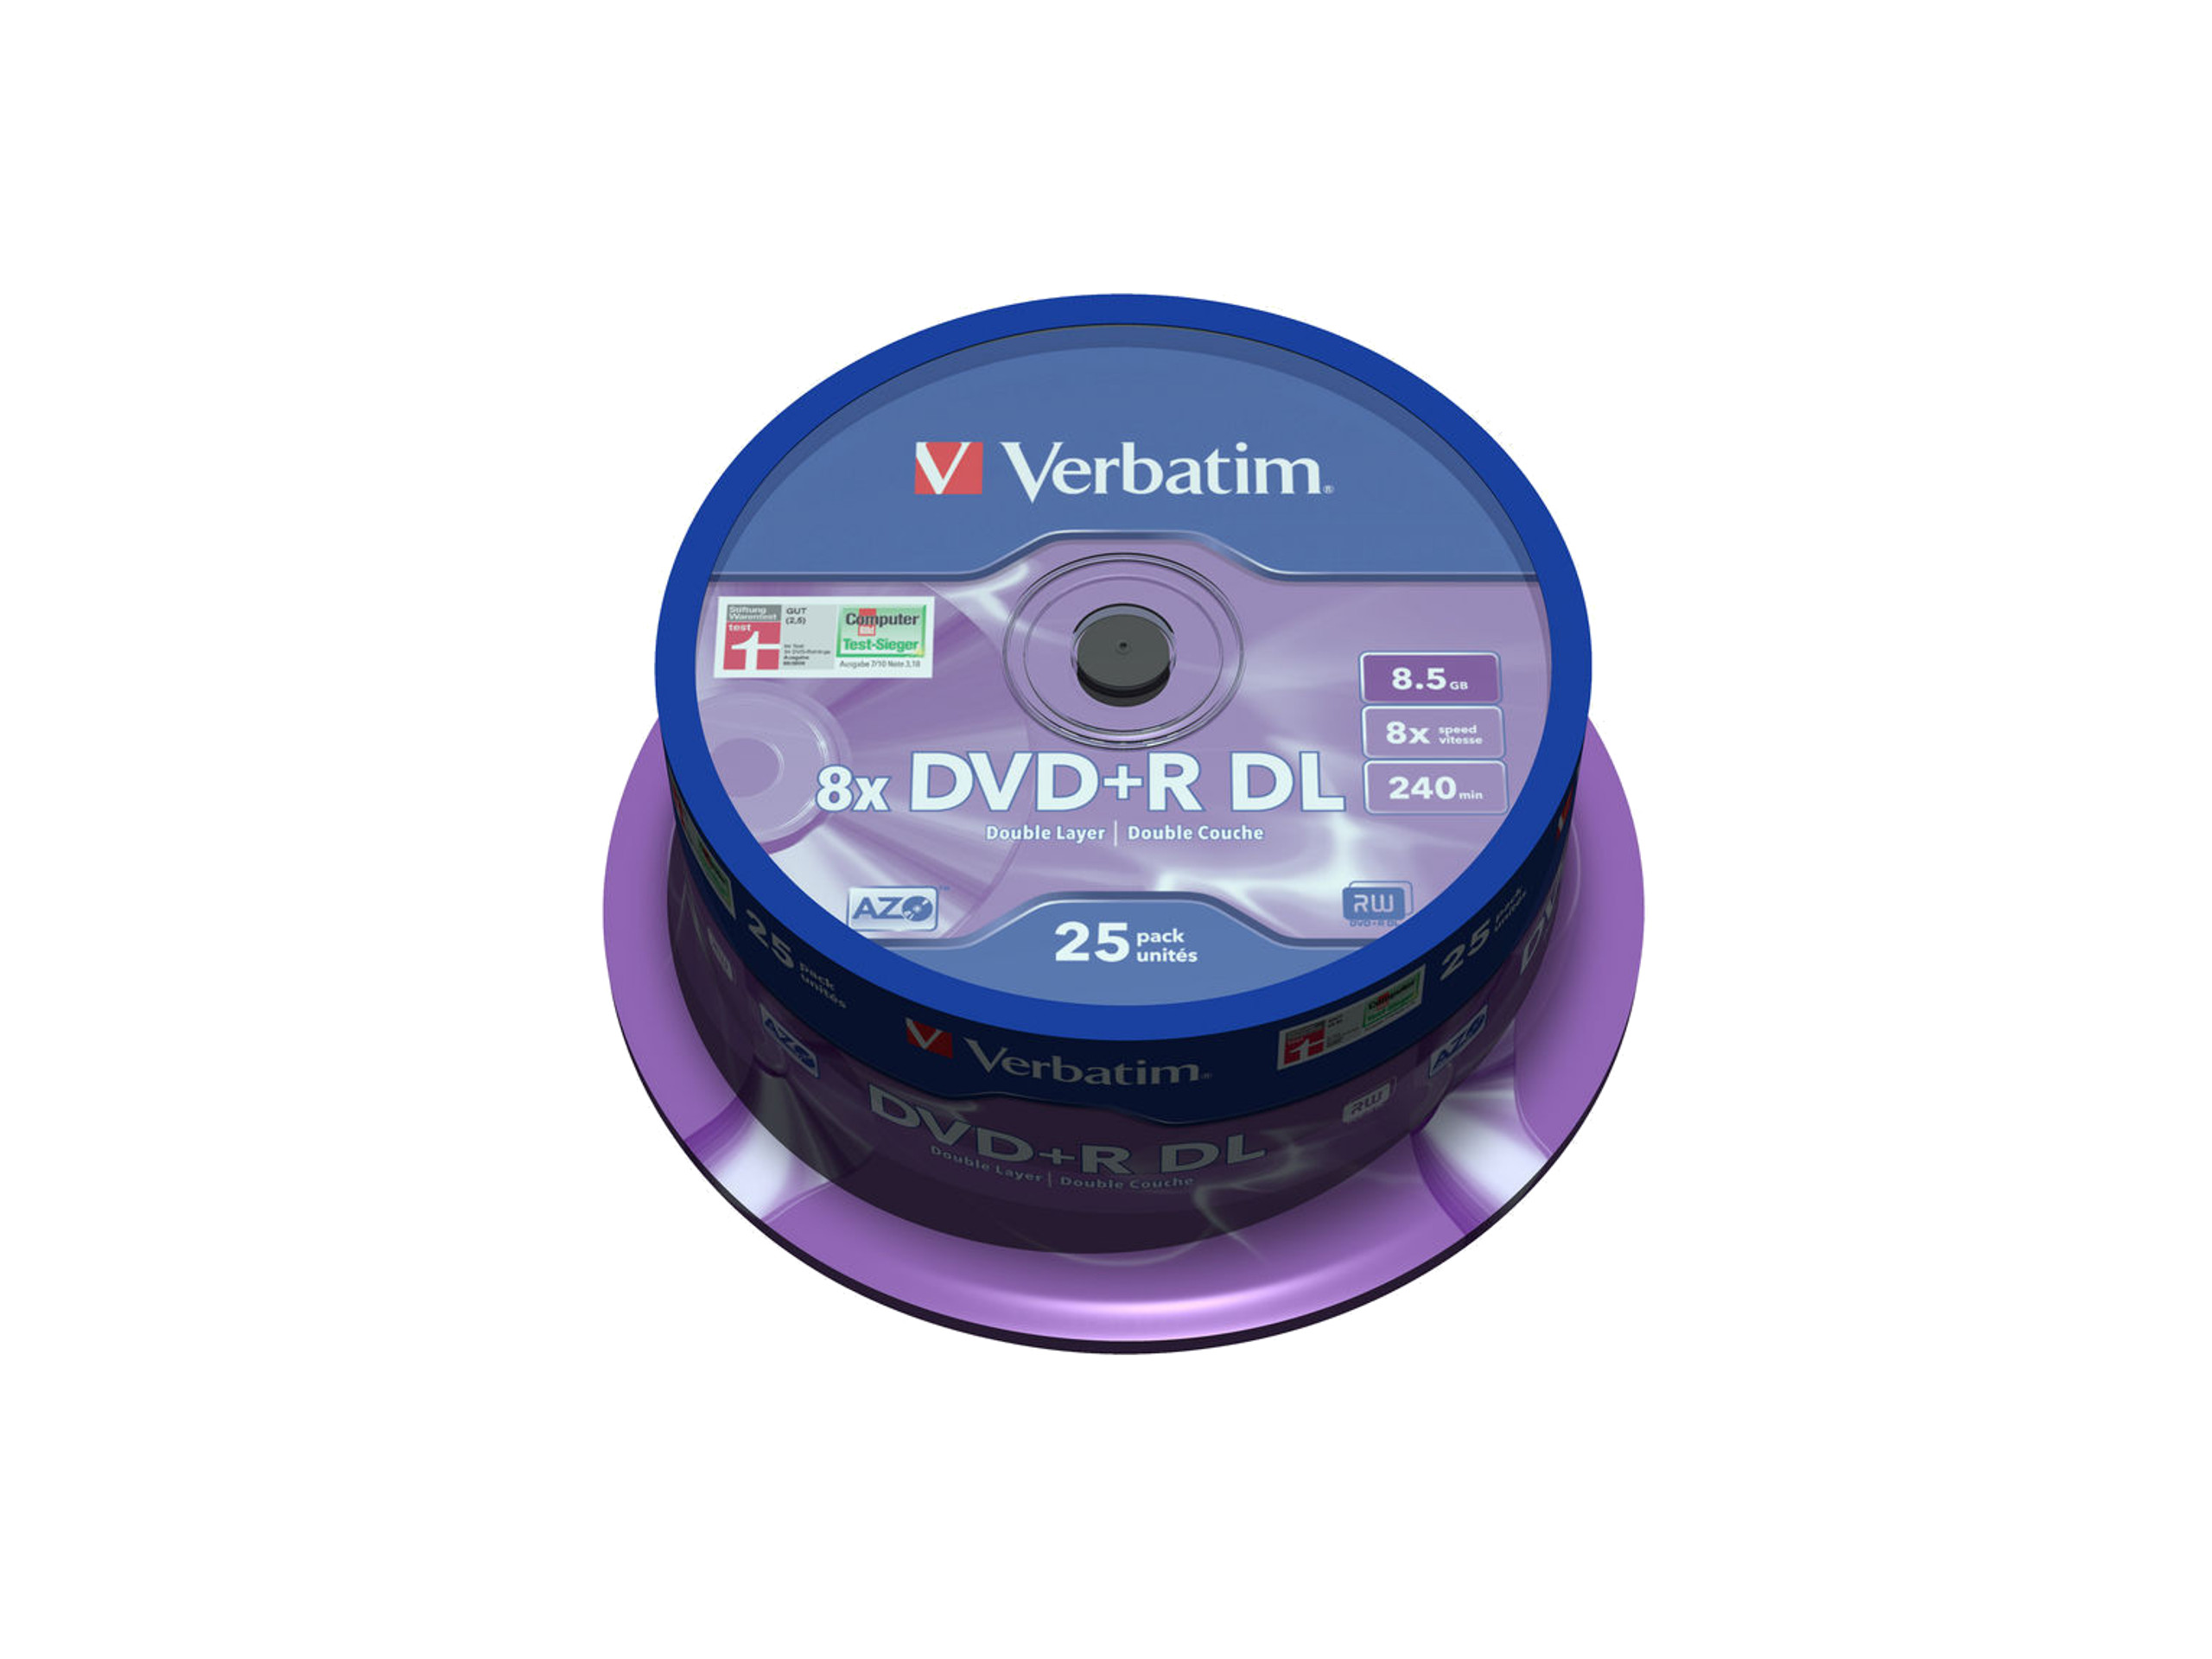 PŁYTY DVD+R 8,5GB 8x DOUBLE LAYER VERBATIM 25sz DL